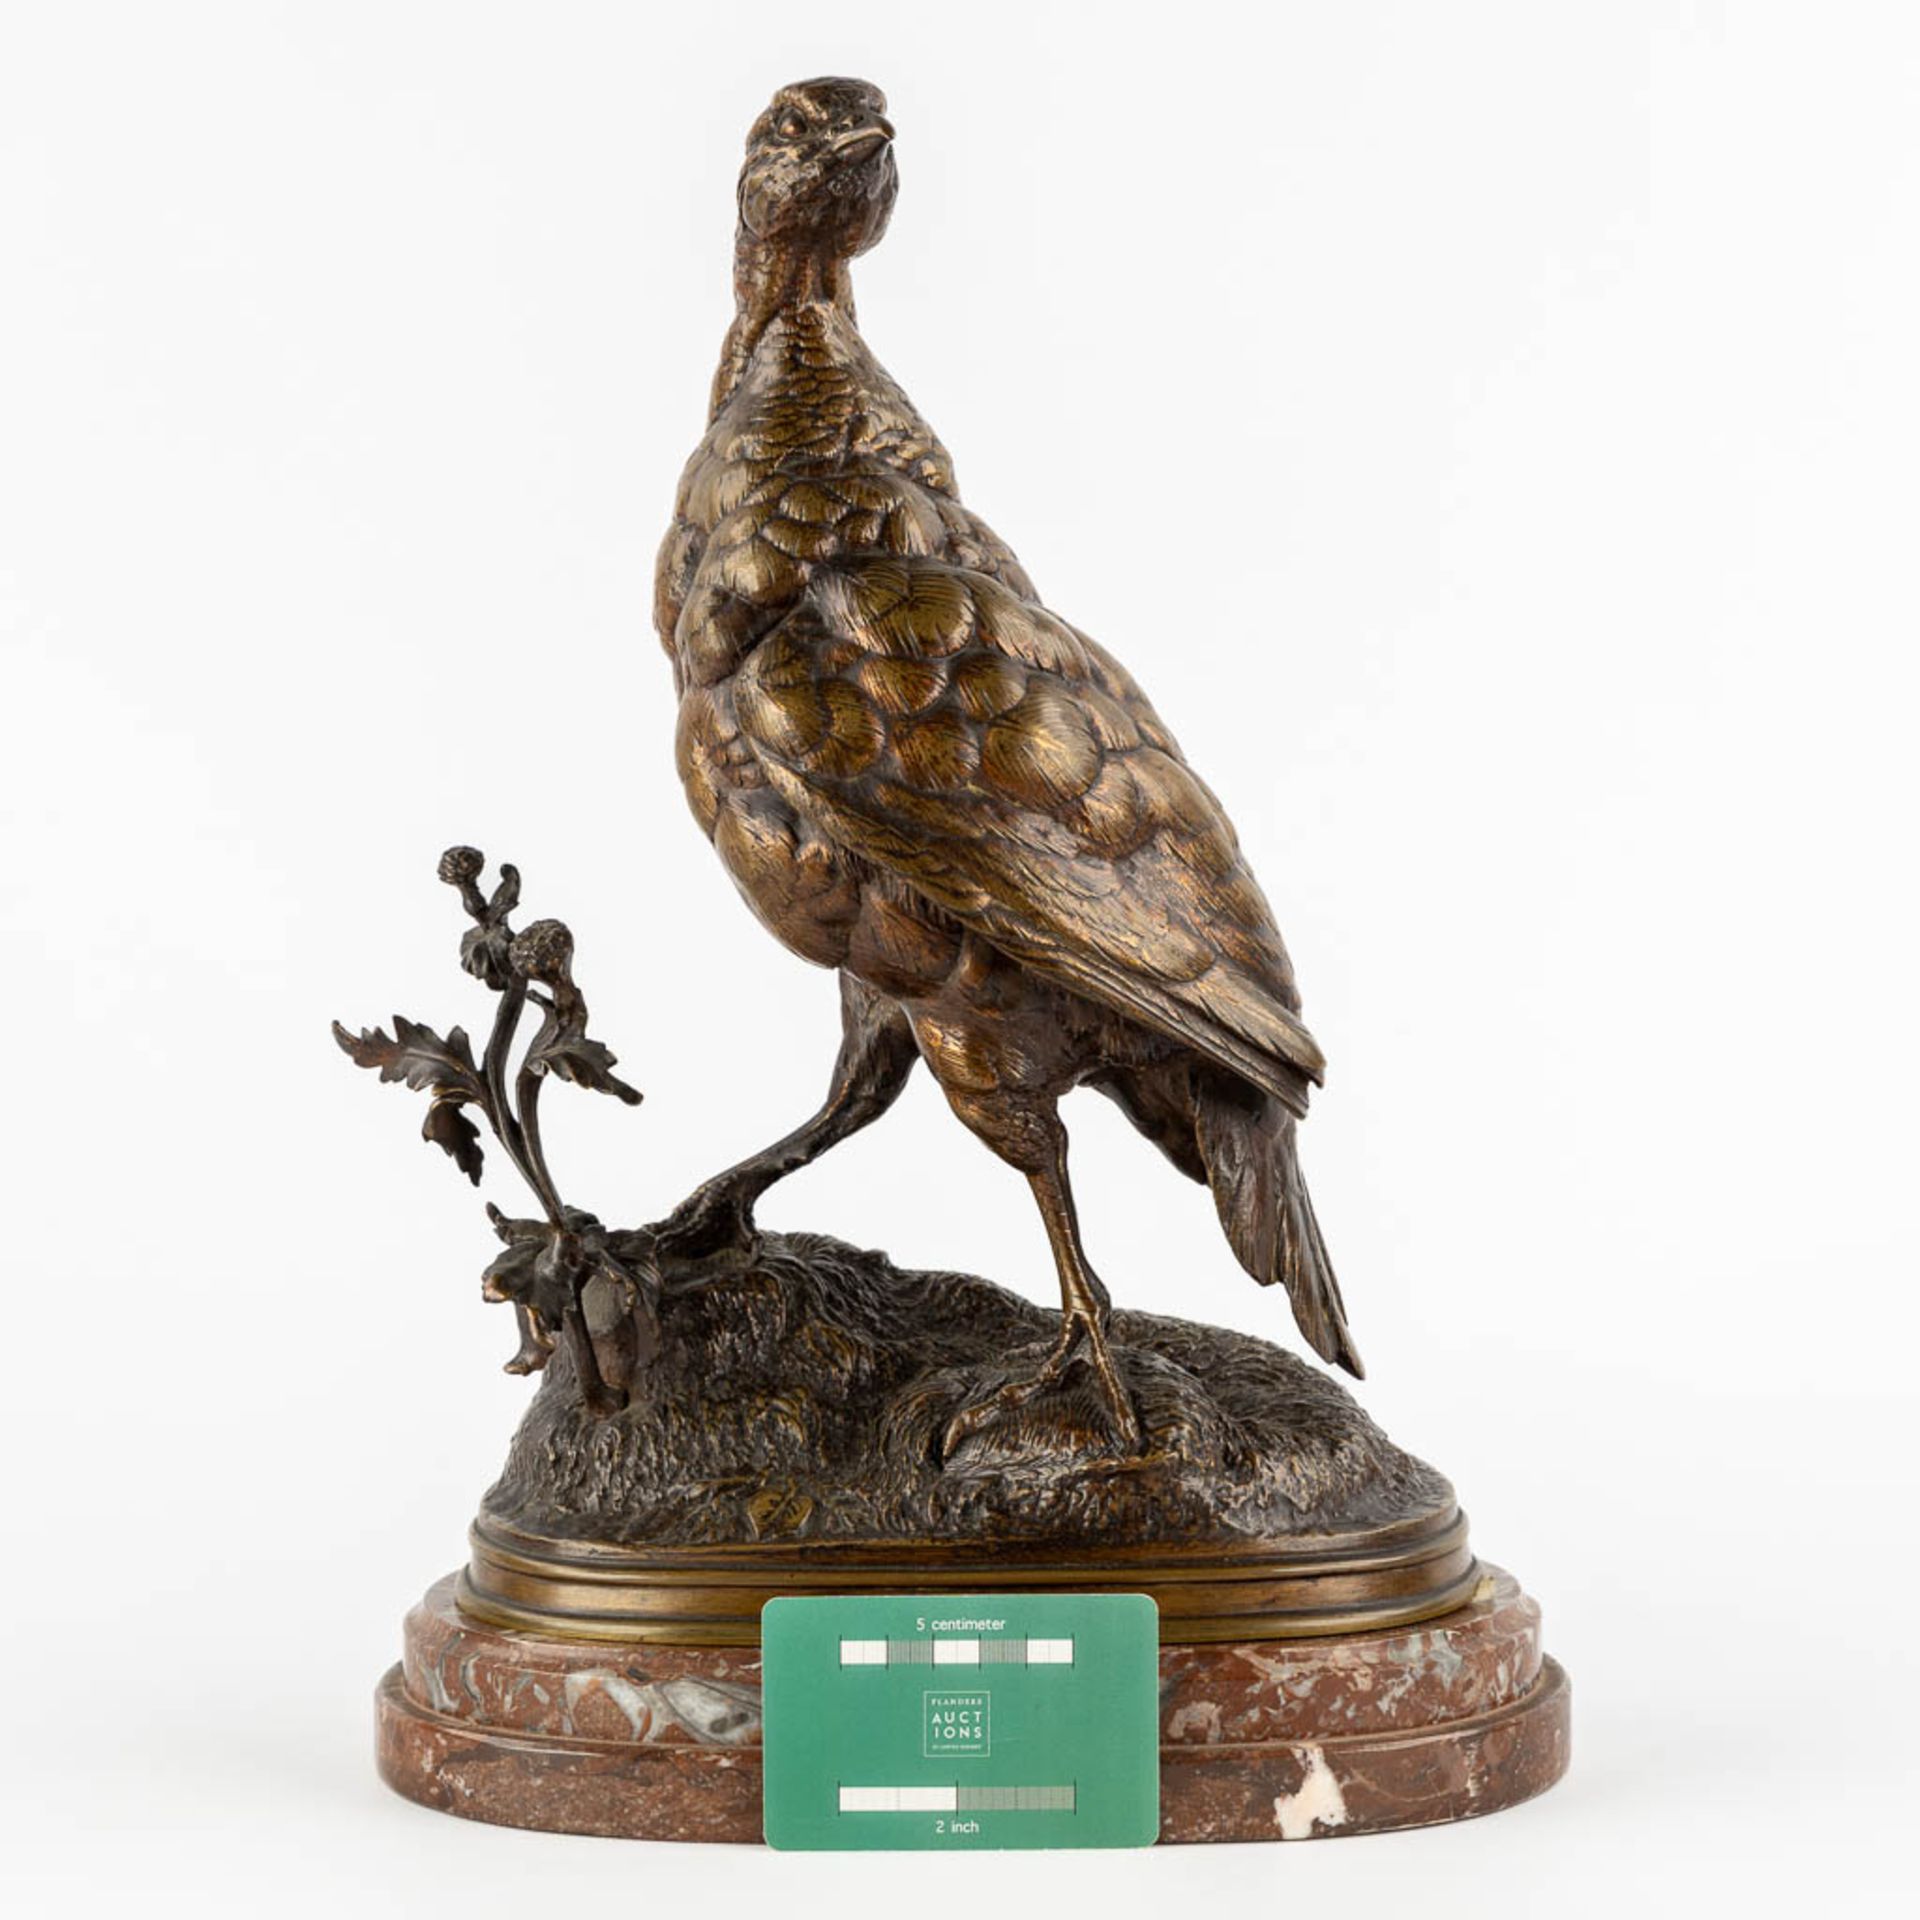 Ferdinand PAUTROT (1832-1874) 'Partridge', patinated bronze. (L:17 x W:27 x H:38 cm) - Image 2 of 10